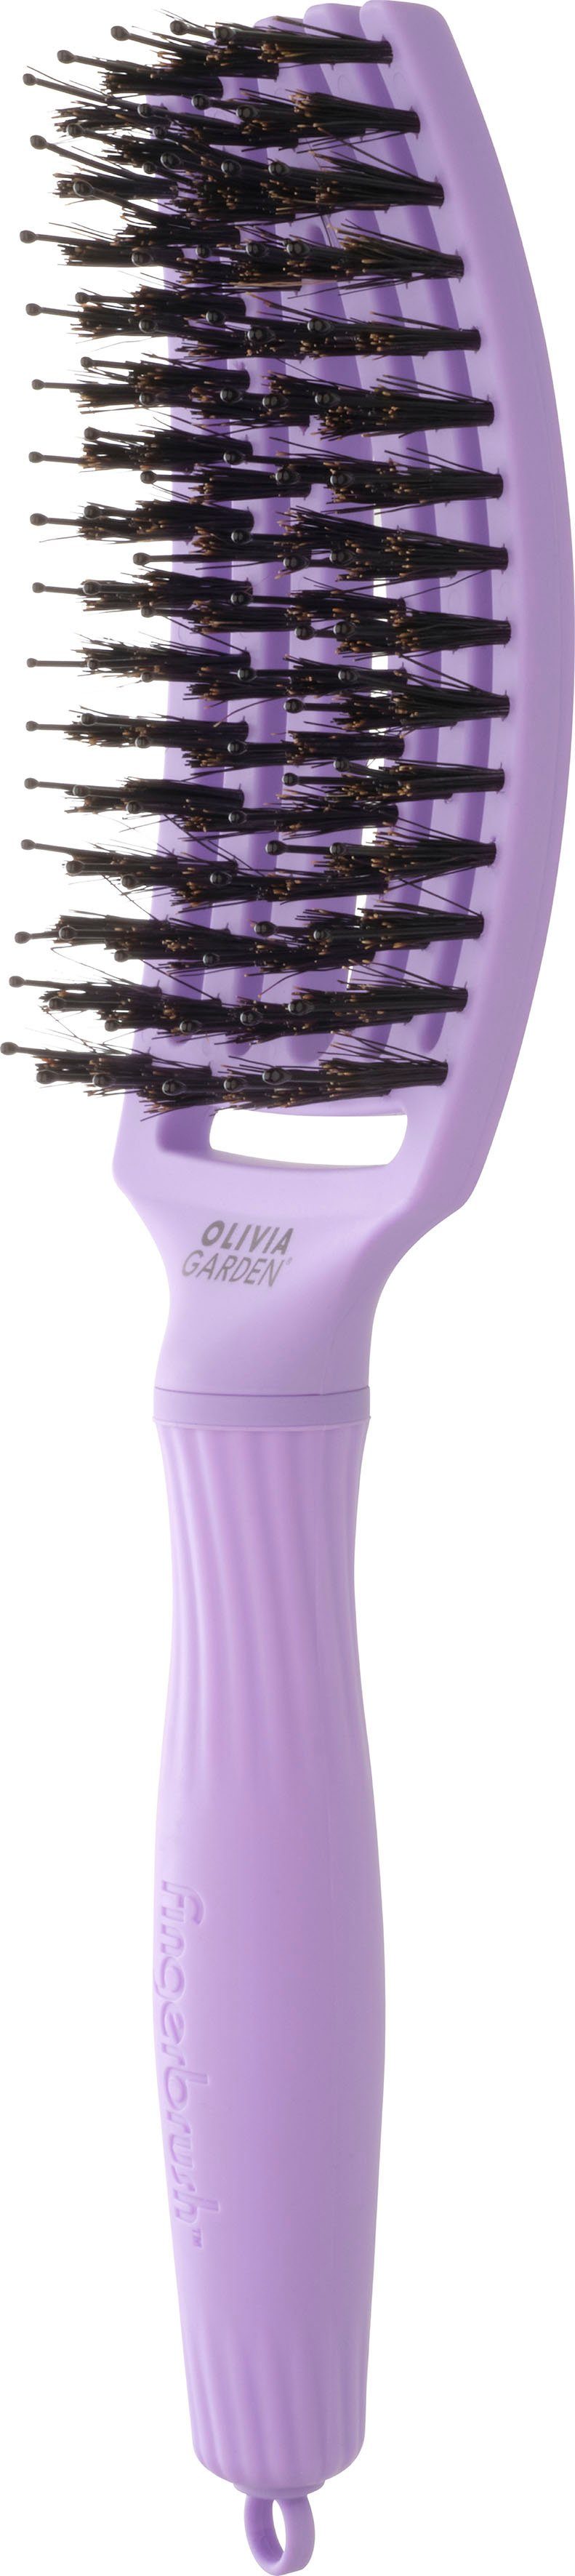 OLIVIA GARDEN Haarbürste Fingerbrush Combo Medium lavendel